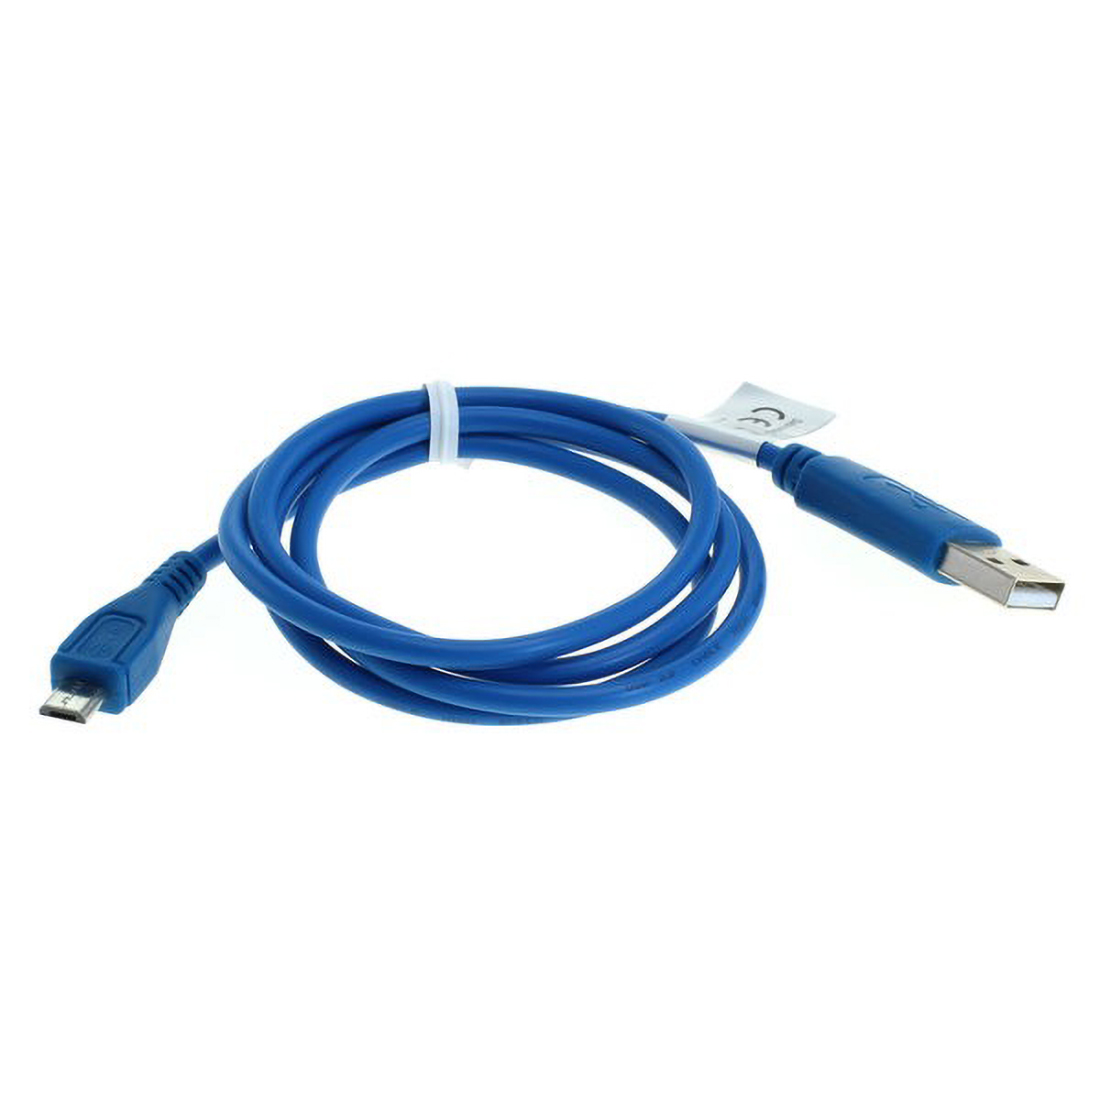 MOBILOTEC USB-Ladekabel kompatibel mit Sony DSC-WX80 Sony, blau sonstige Kabel